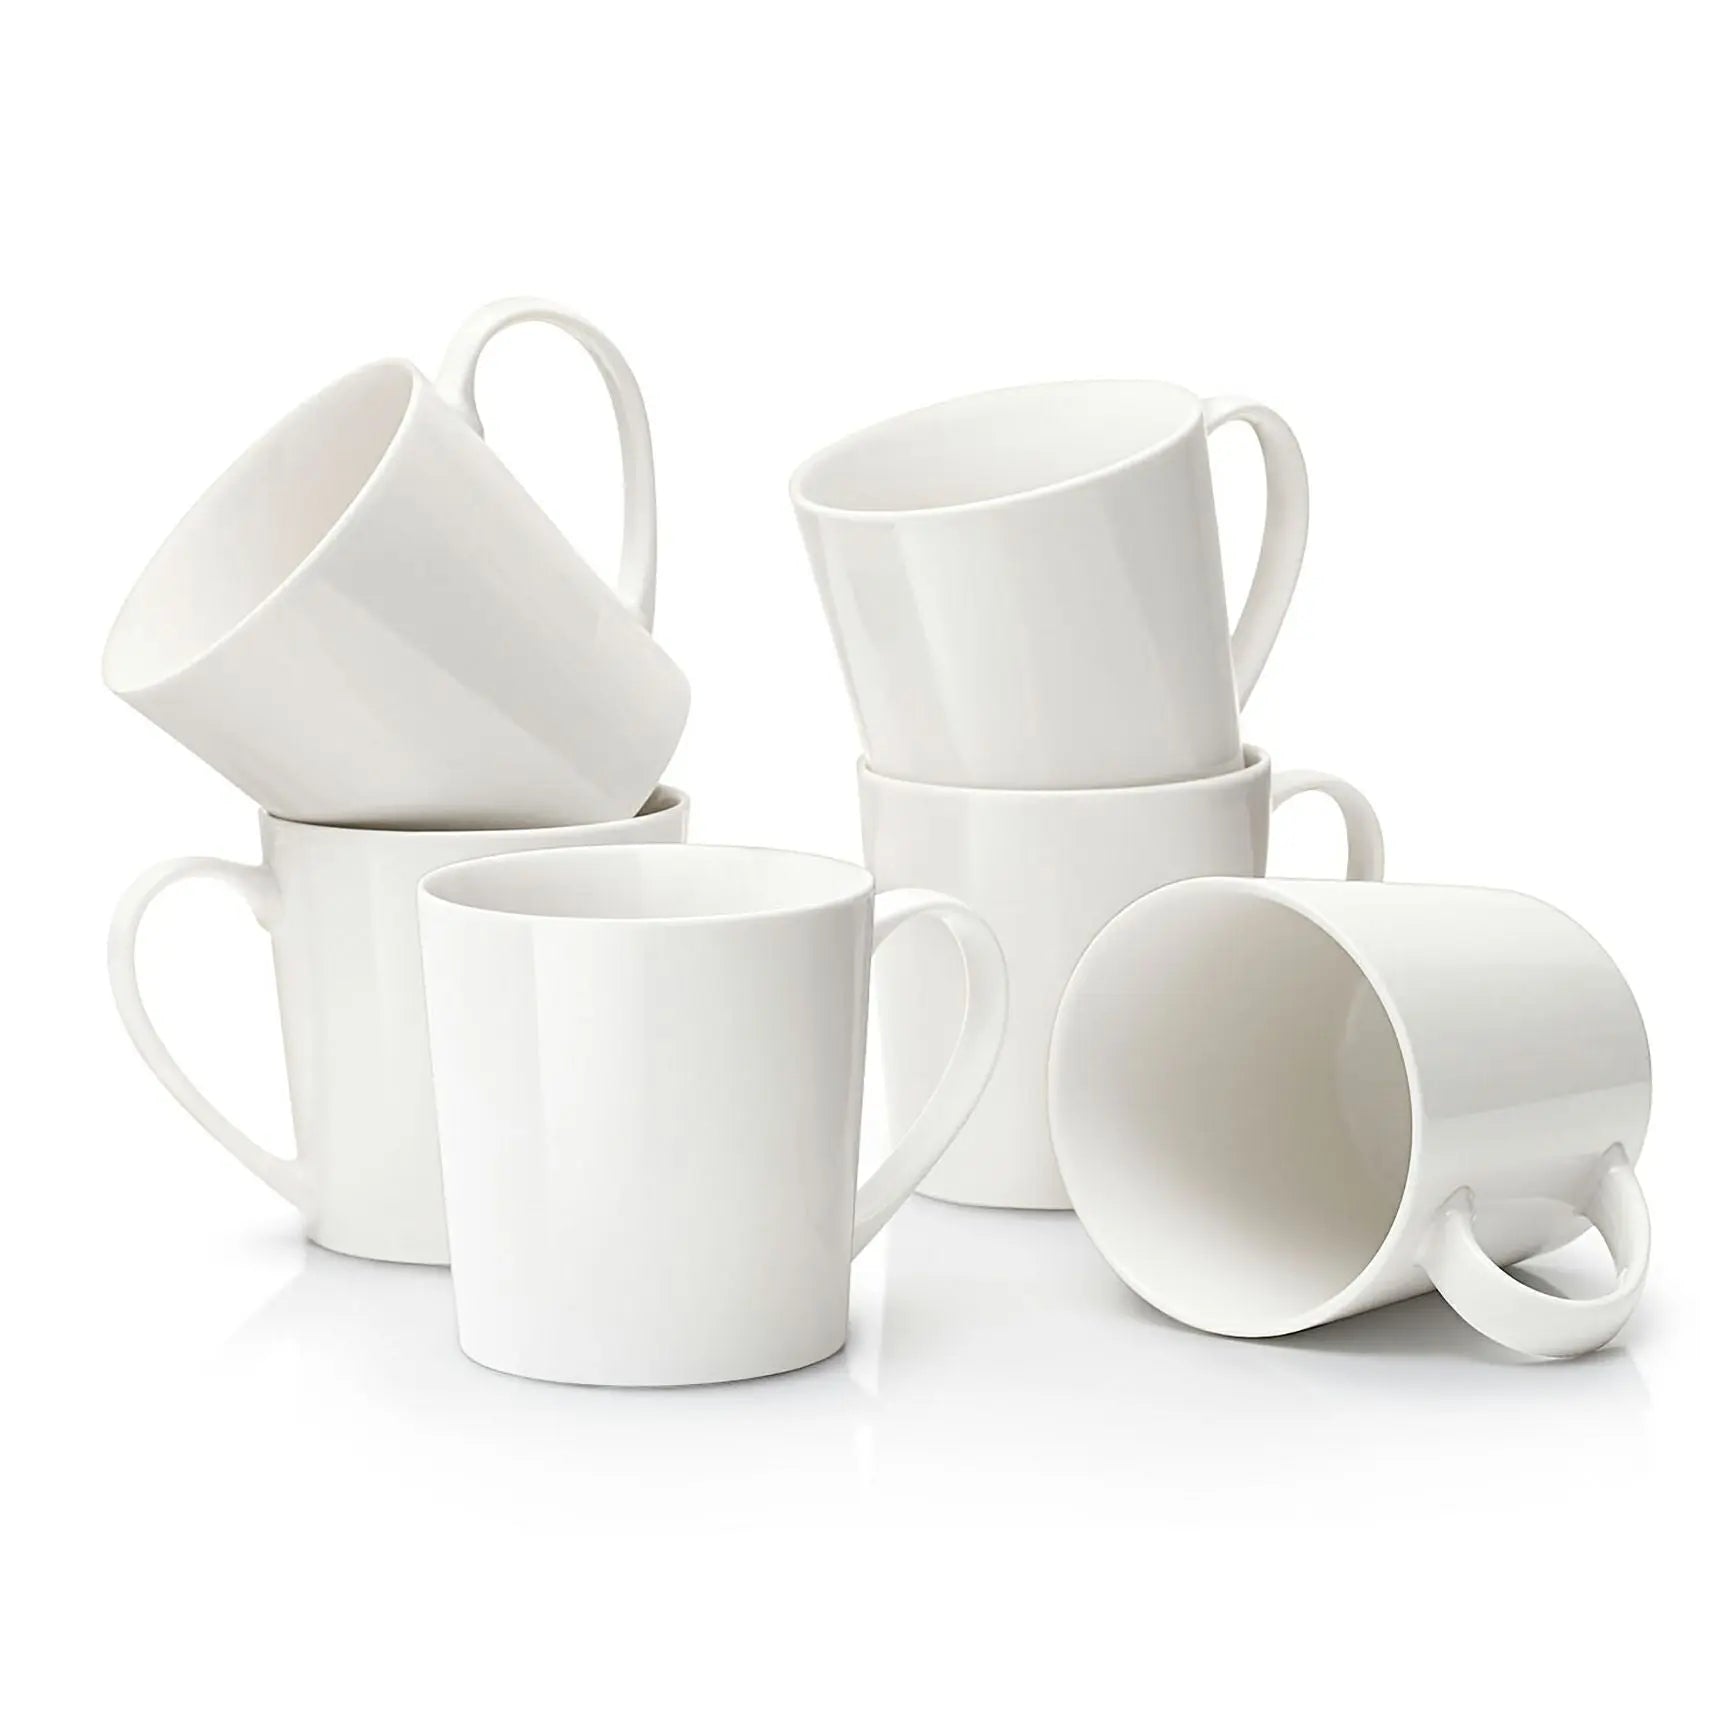 DOWAN Coffee Mugs Set of 6, Colorful 19 oz Large Porcelain Mugs with Handle  for Coffee Tea and Cocoa…See more DOWAN Coffee Mugs Set of 6, Colorful 19